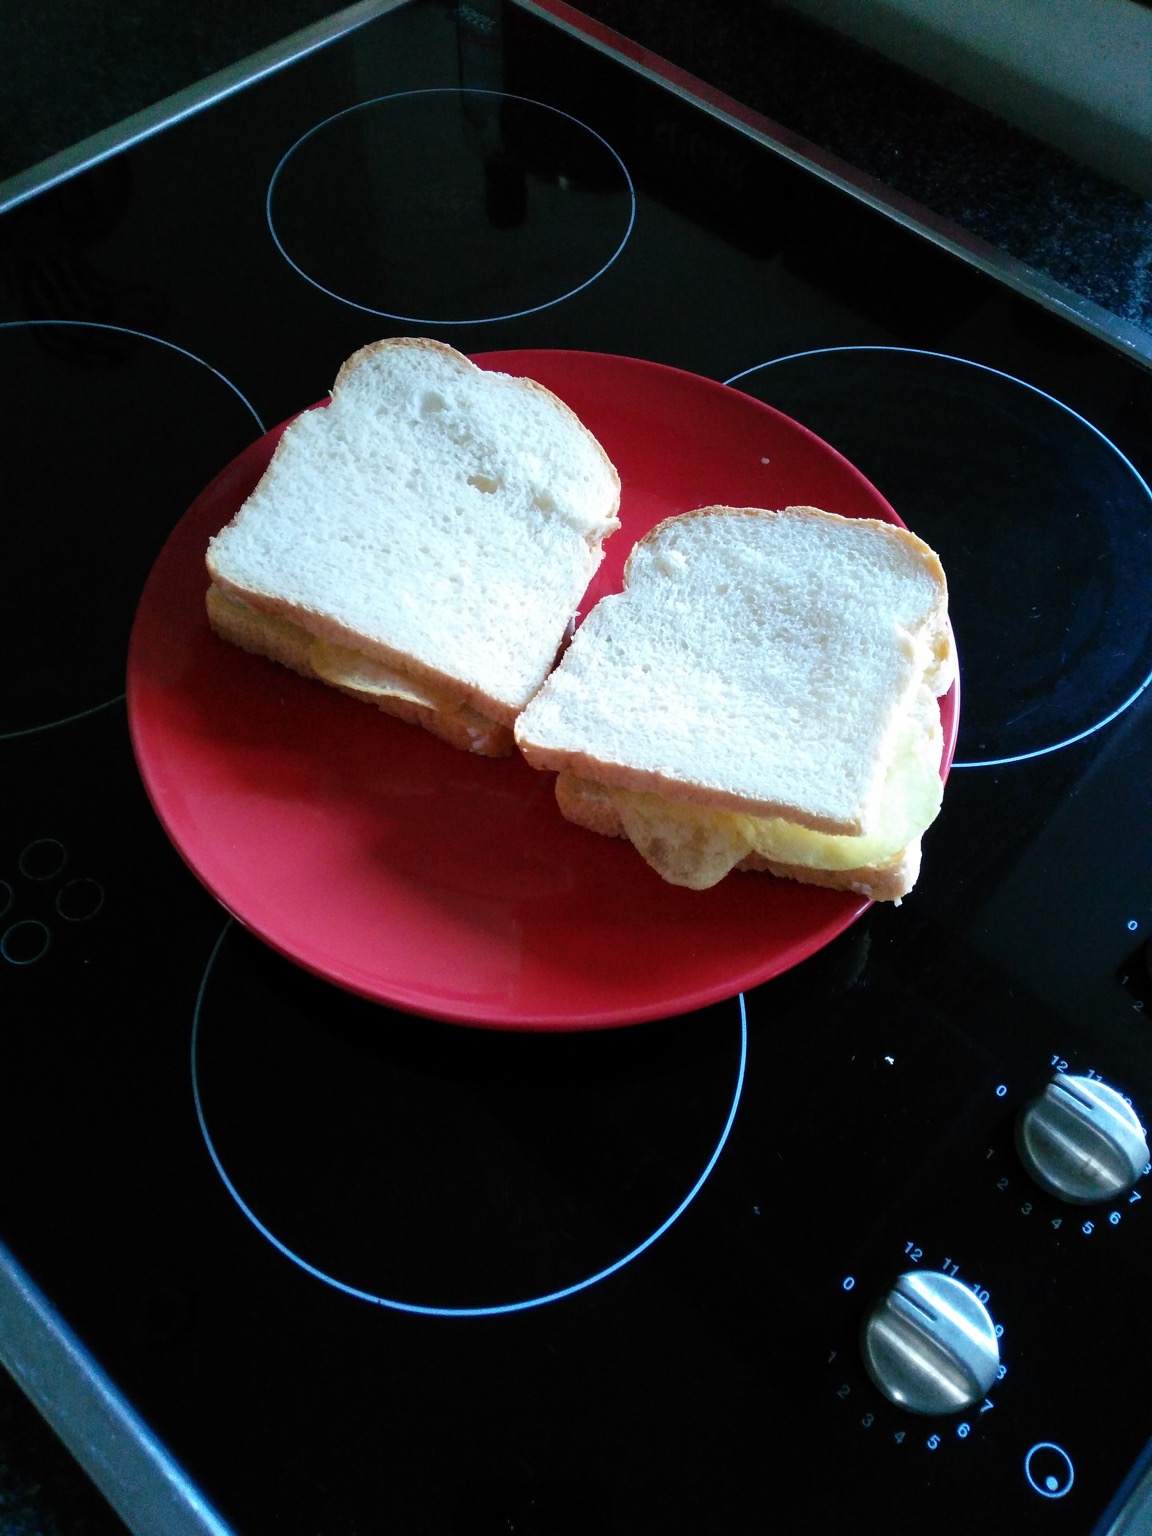 Two sandwiches containing potato crisps